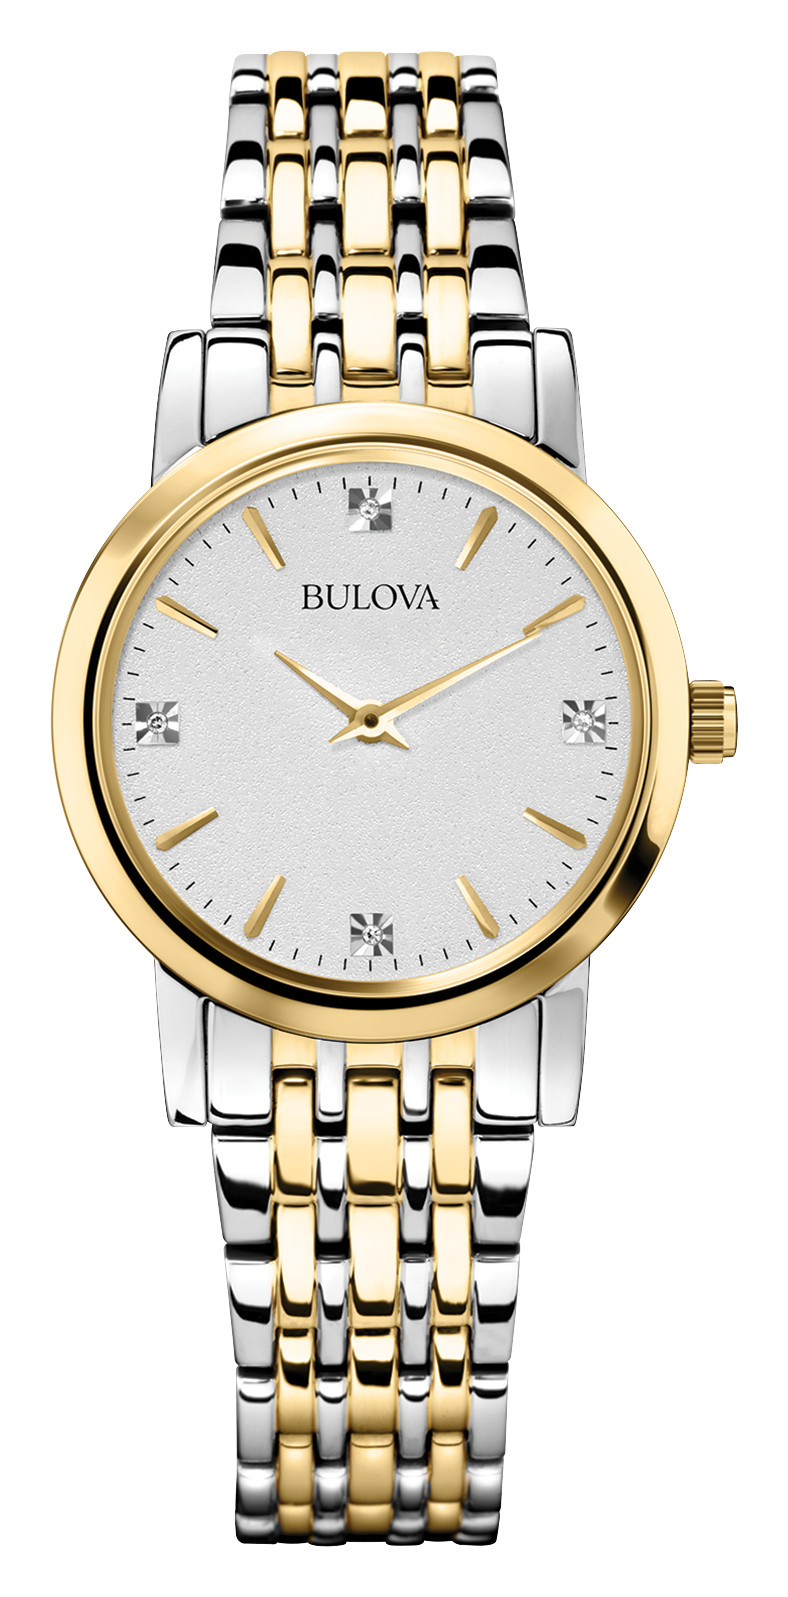 Bulova's new watch honors Rat Pack & Frank Sinatra | CNN Underscored